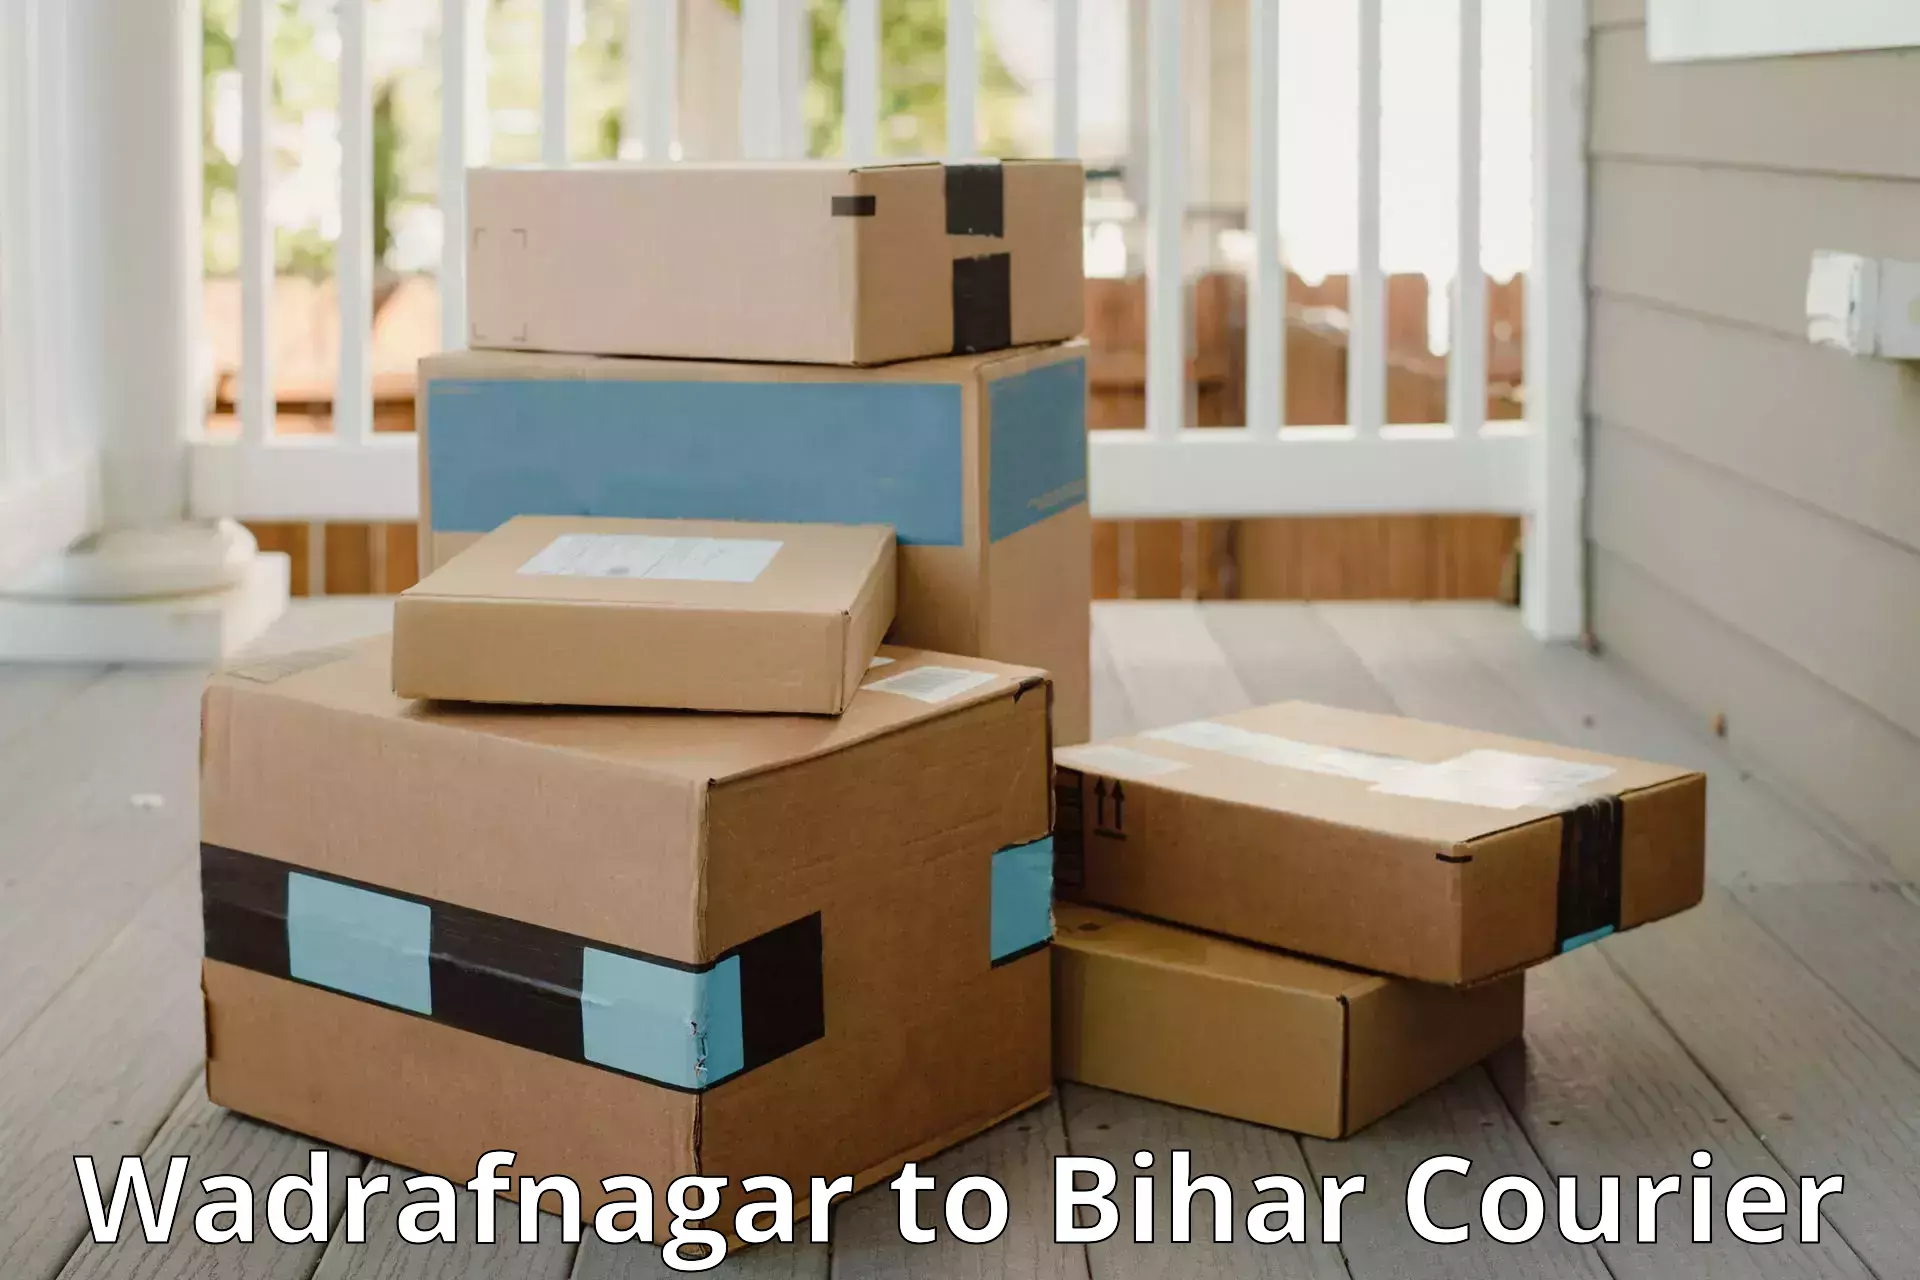 Luggage transport solutions in Wadrafnagar to Aurangabad Bihar